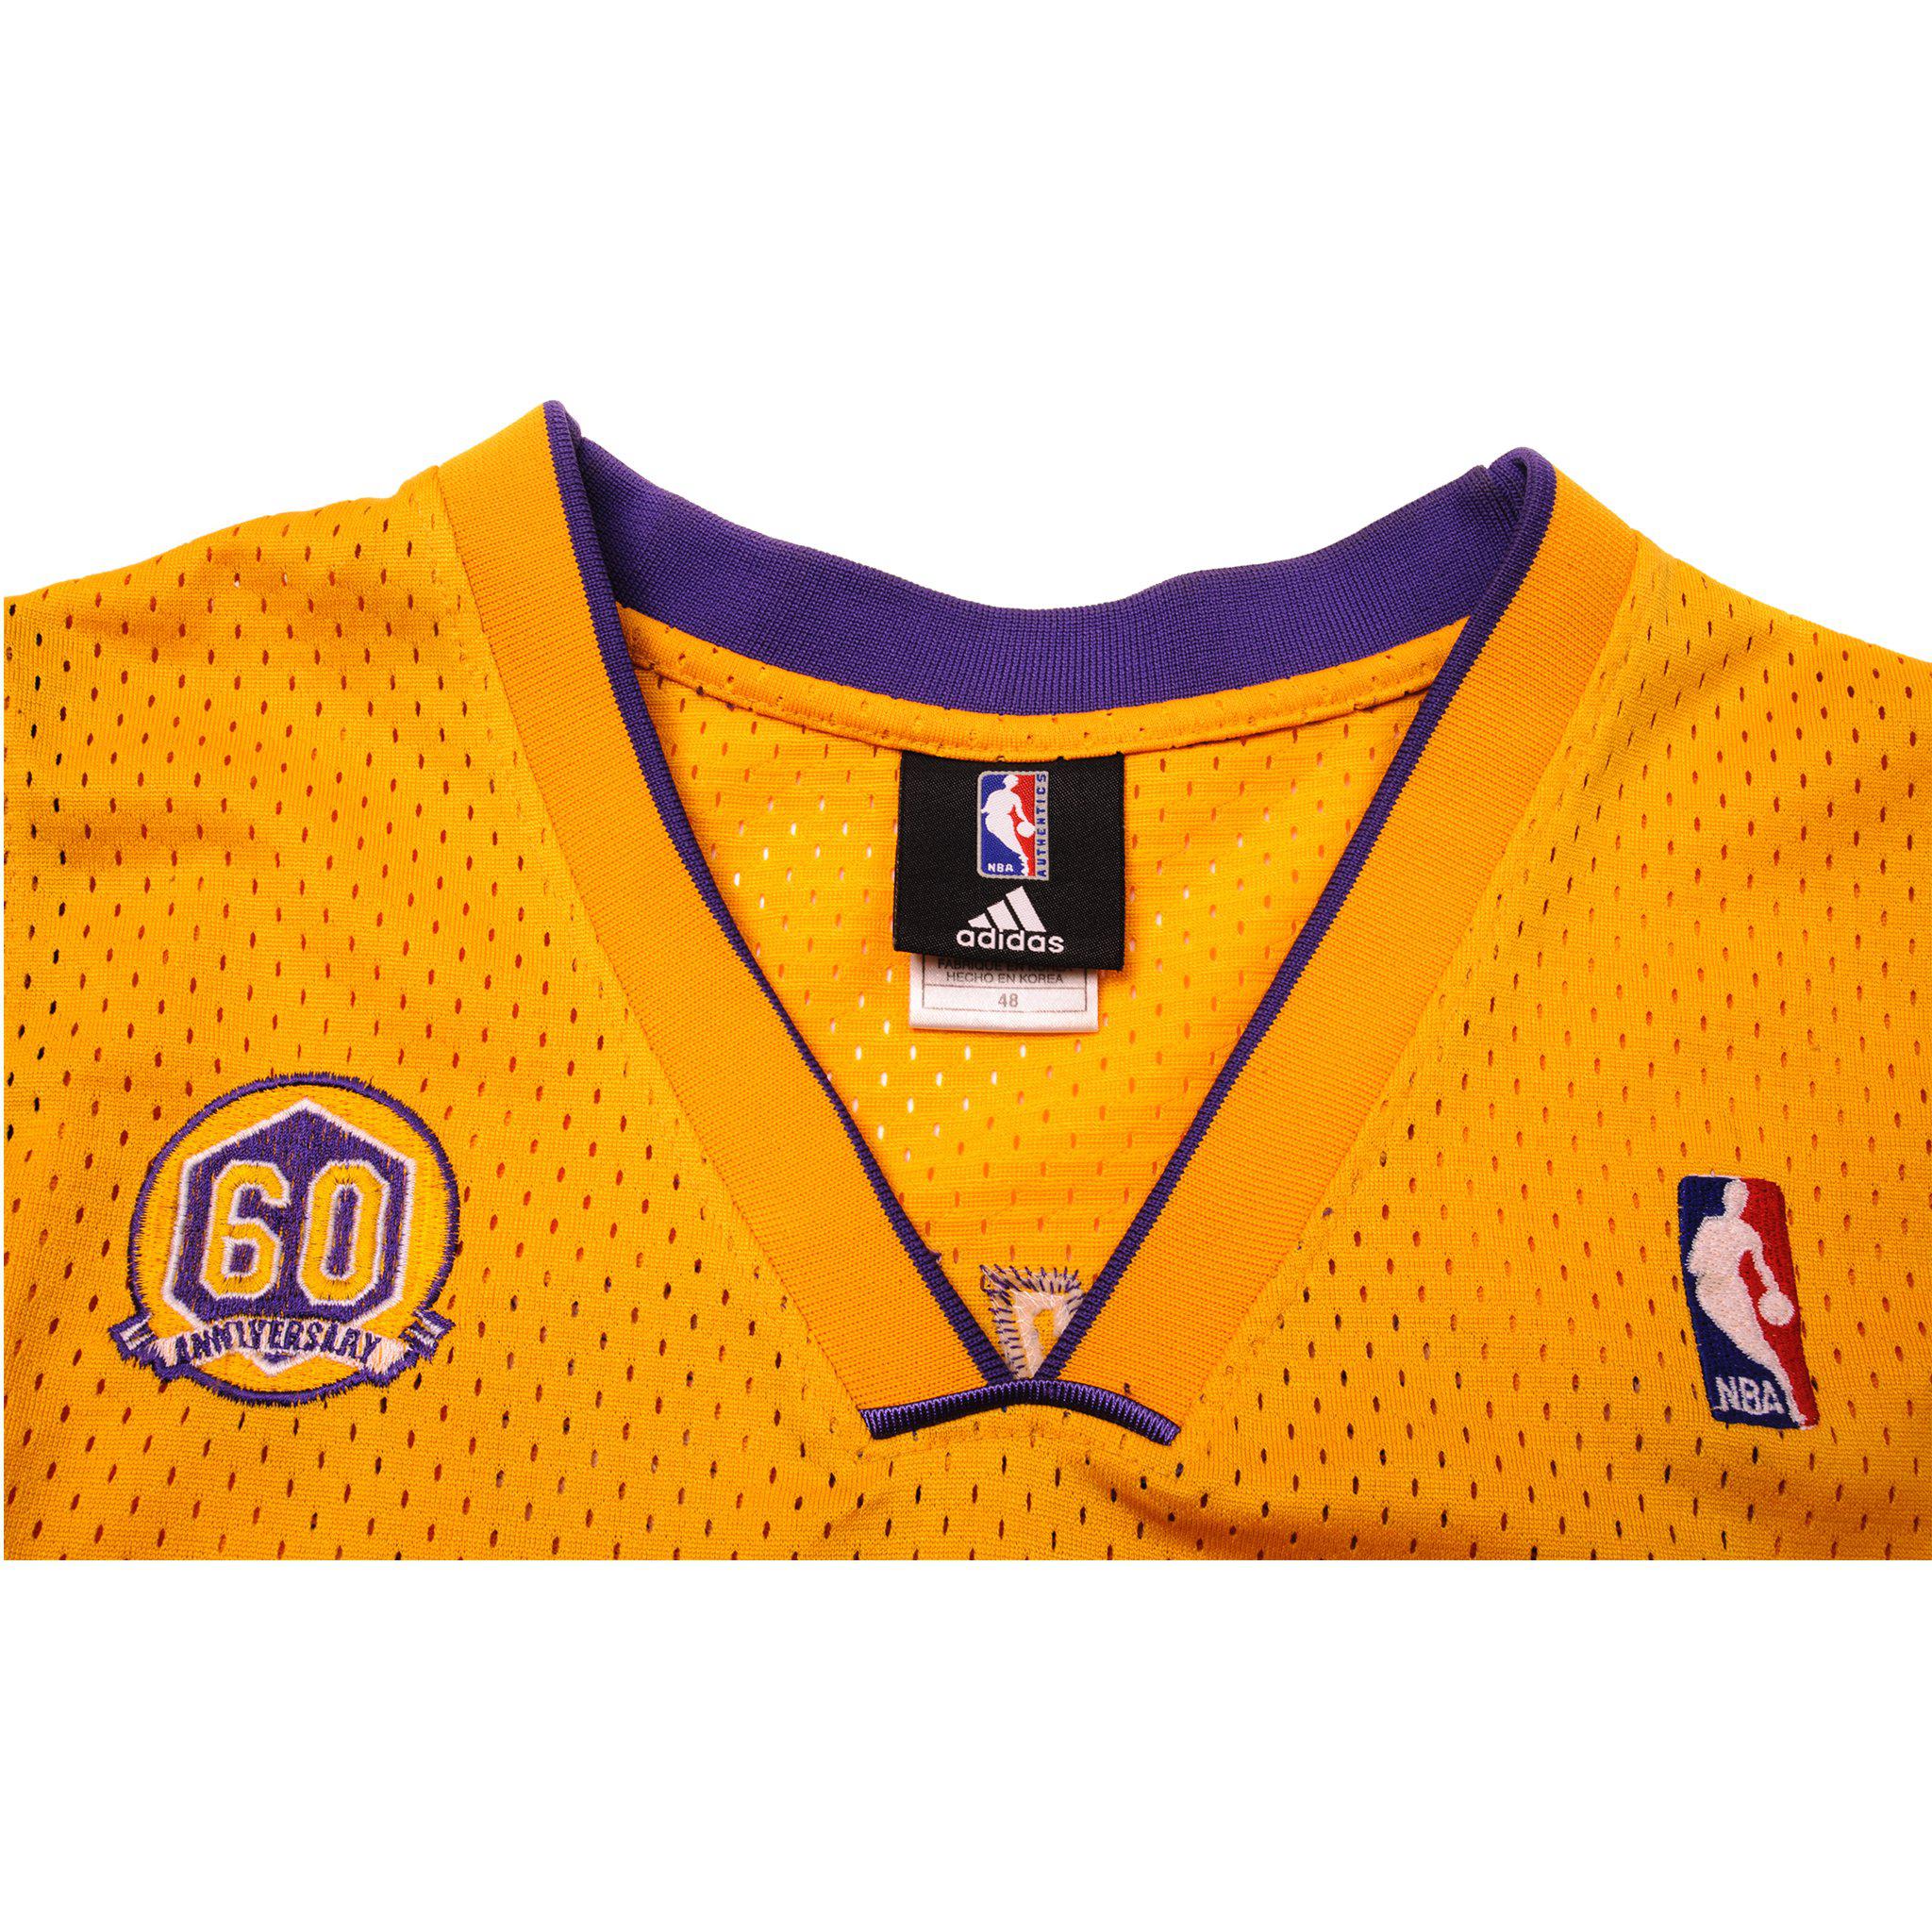 Kobe Bryant Adidas LA Lakers Hardwood Classic Jersey Sz L +2 Length